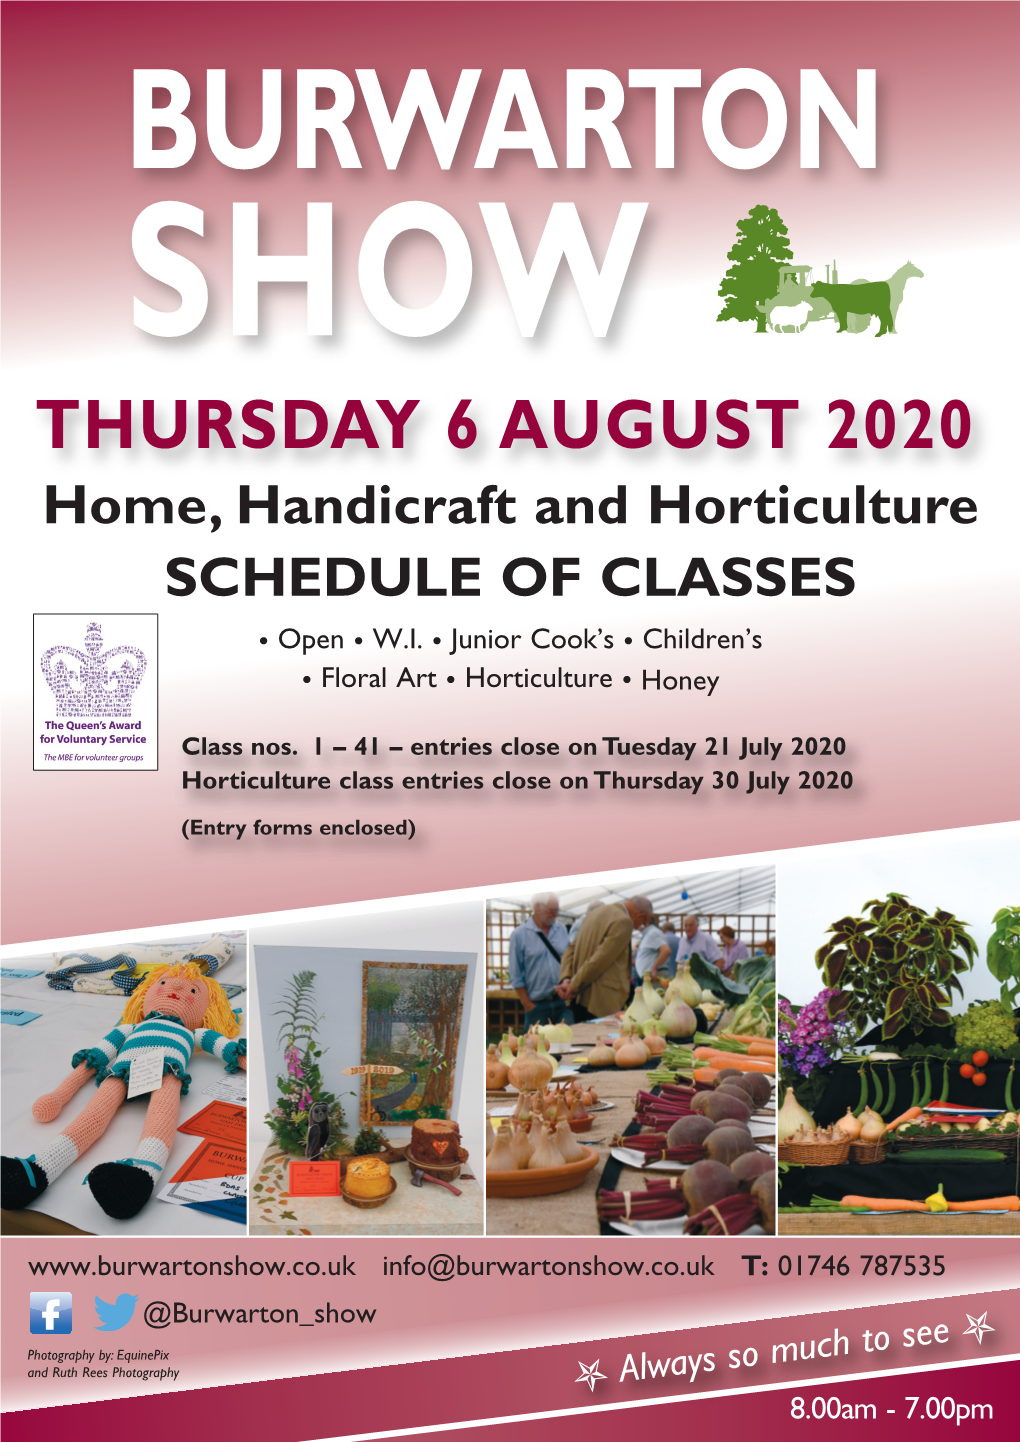 BURWARTON SHOW THURSDAY 6 AUGUST 2020 Home, Handicraft and Horticulture